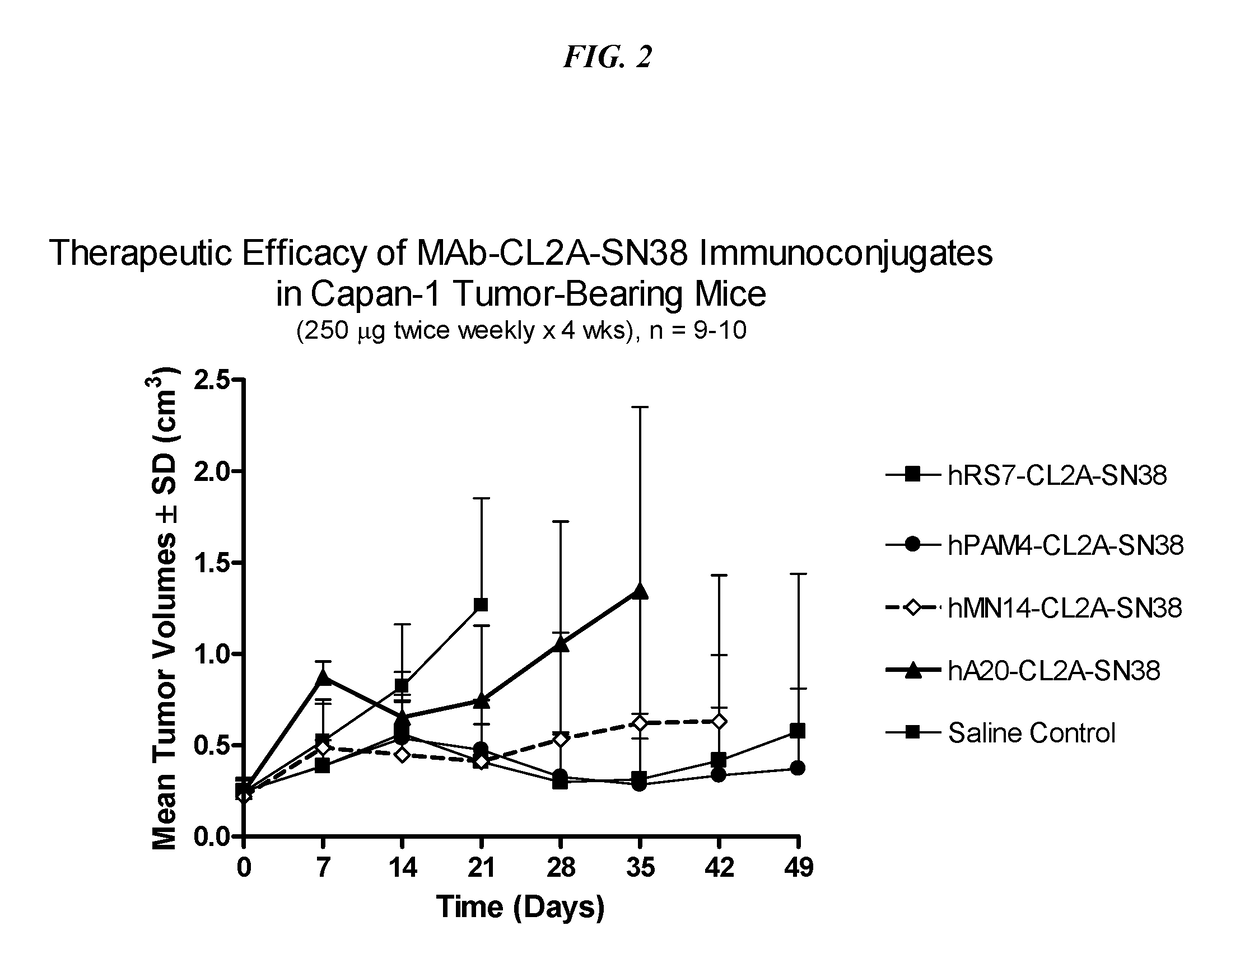 Antibody-SN-38 immunoconjugates with a CL2A linker